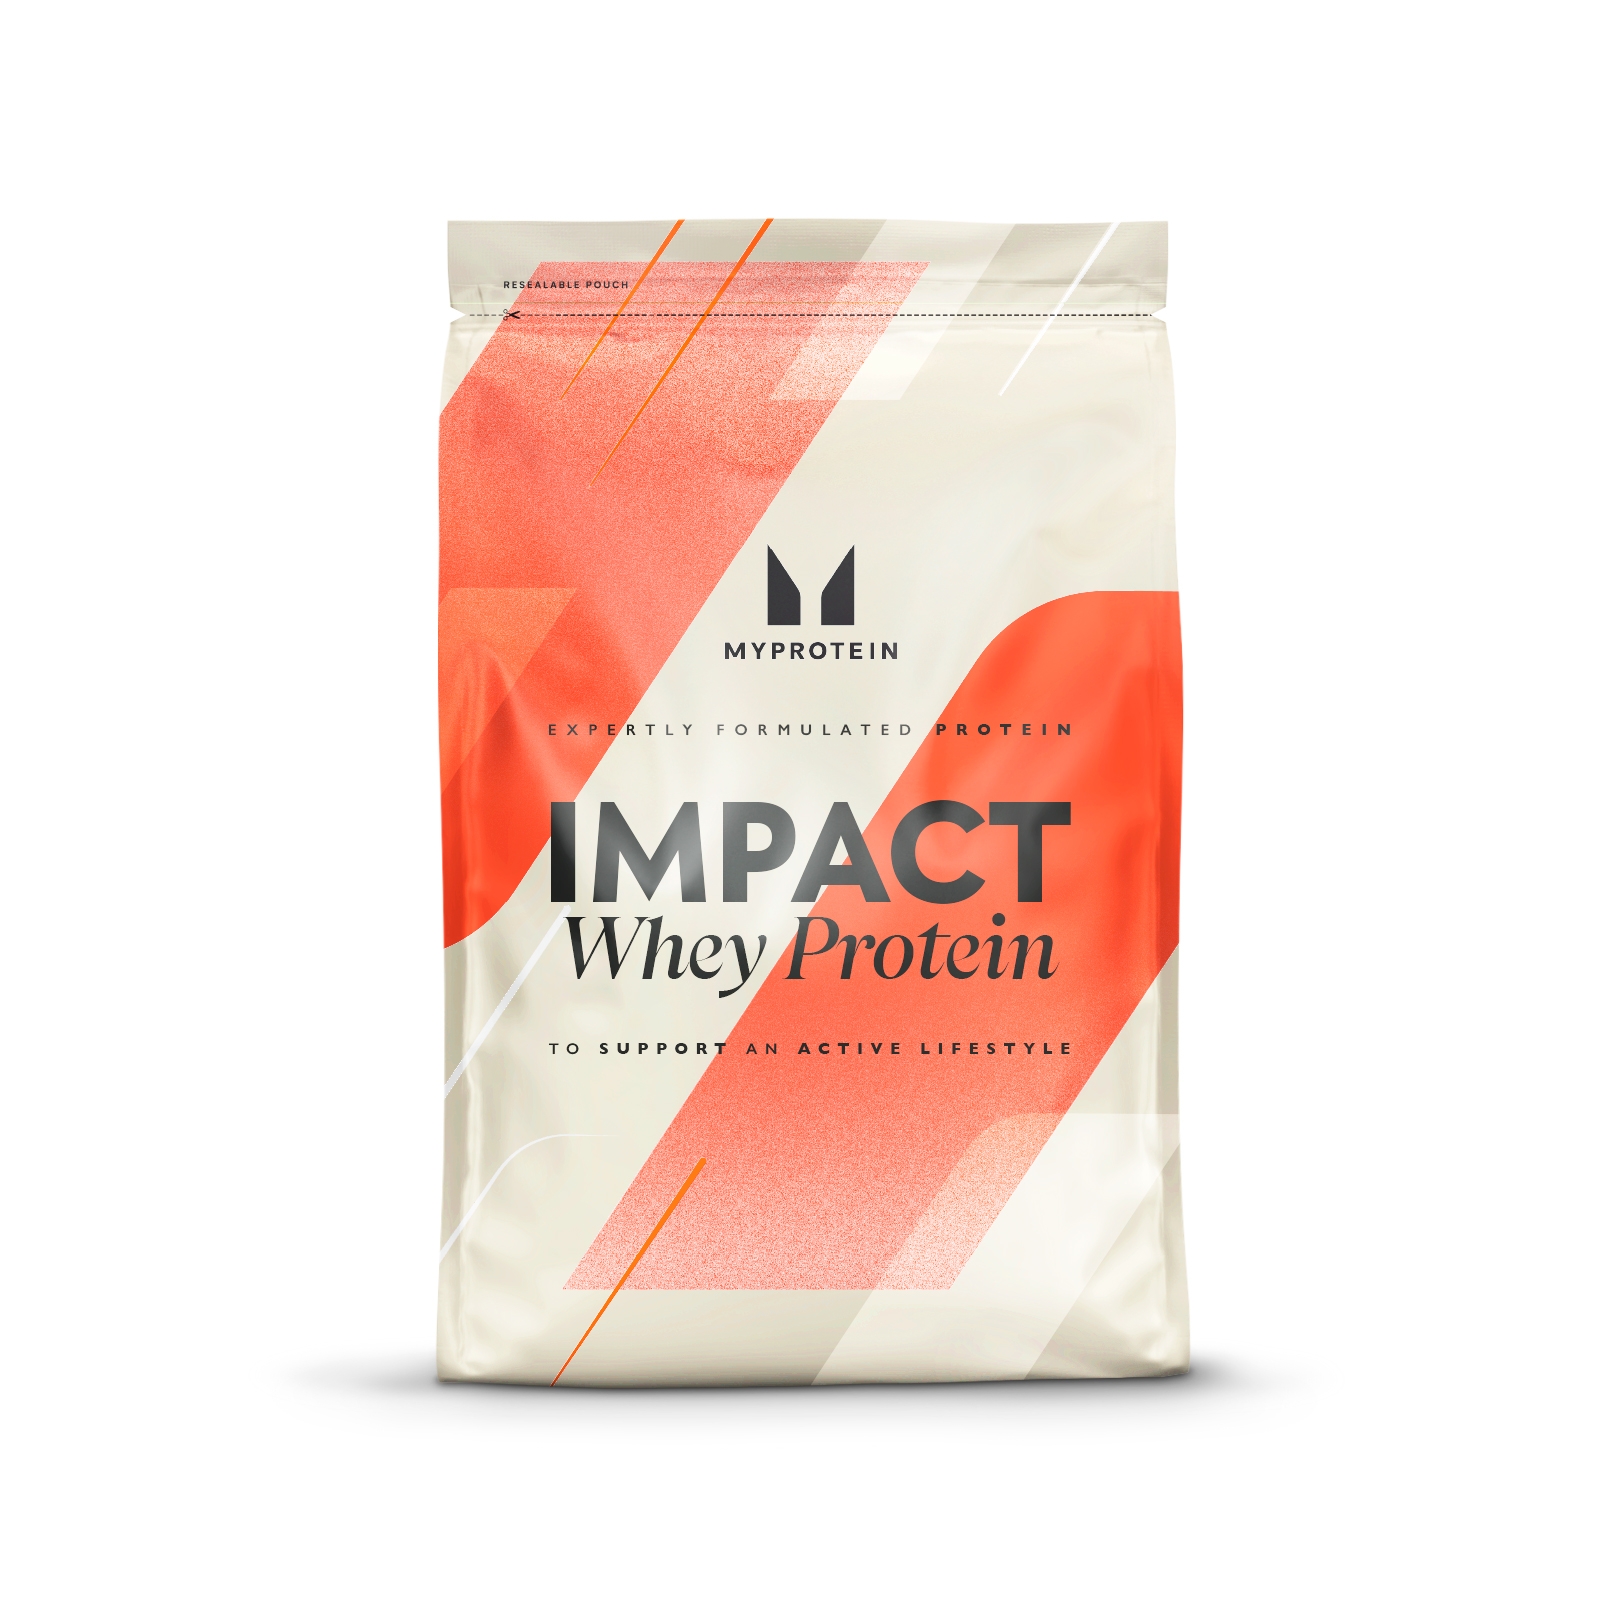 Image of Myprotein Impact Whey Protein - 25kg - Chocolate e menta (stevia) 10530967 PT21